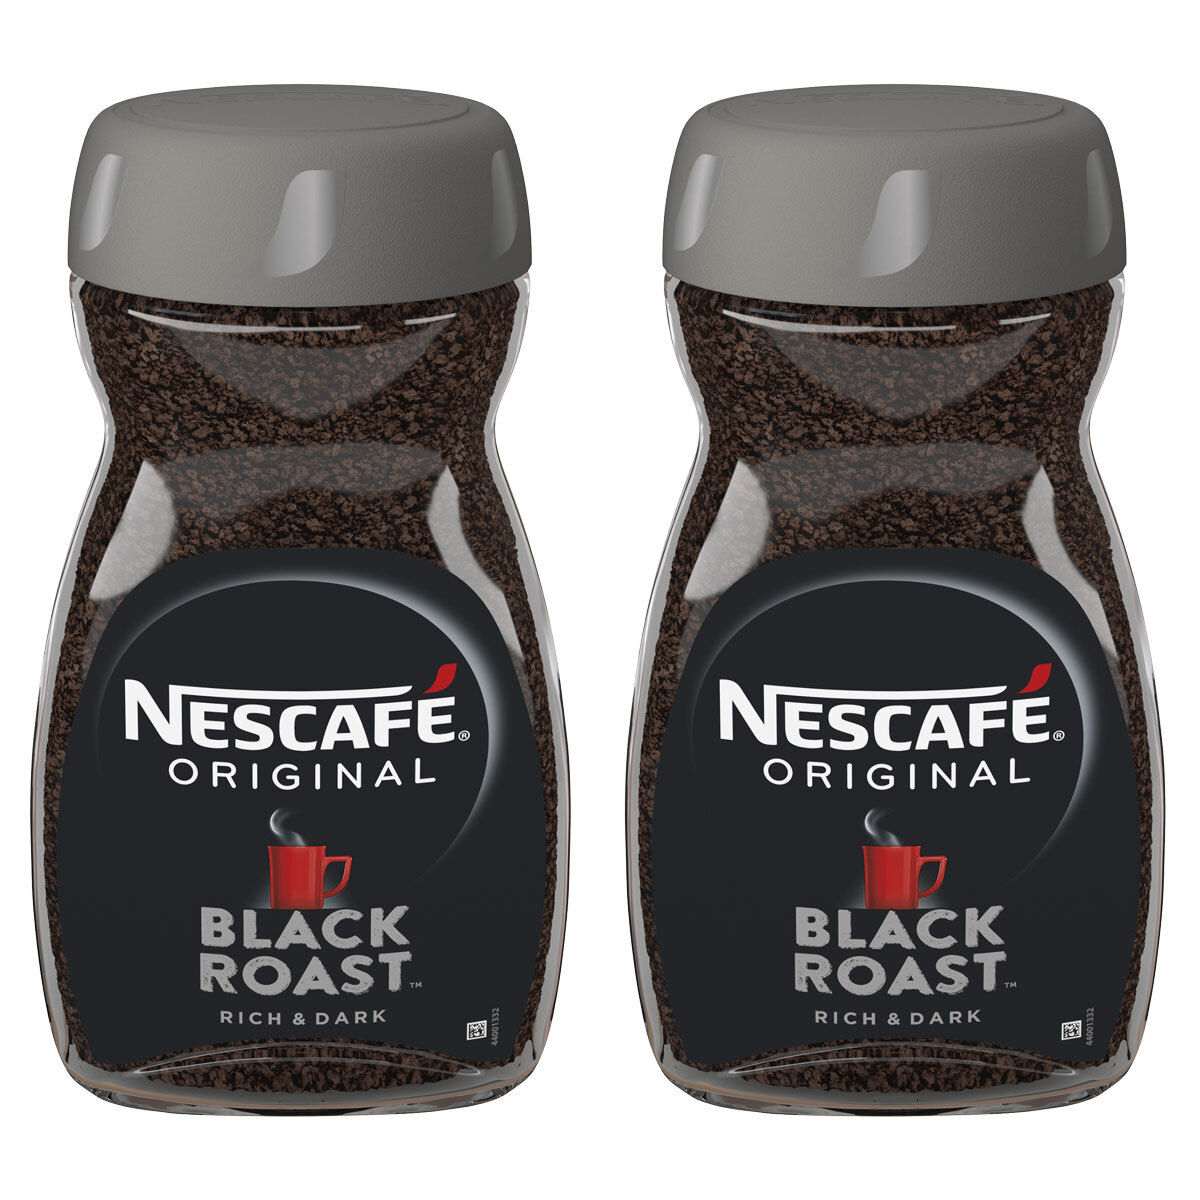 Nescafe Original Black Roast Instant Coffee, 2 x 200g